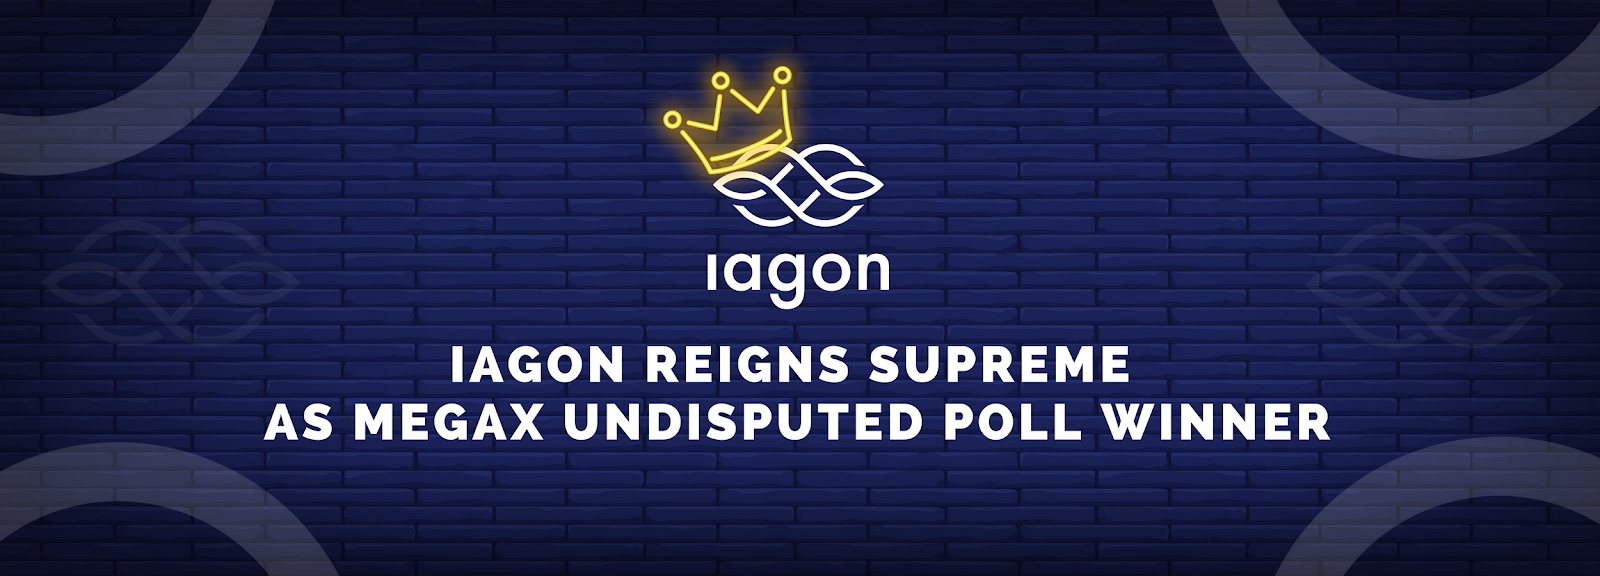 IAGON Reigns Supreme as MegaX Undisputed Poll Winner